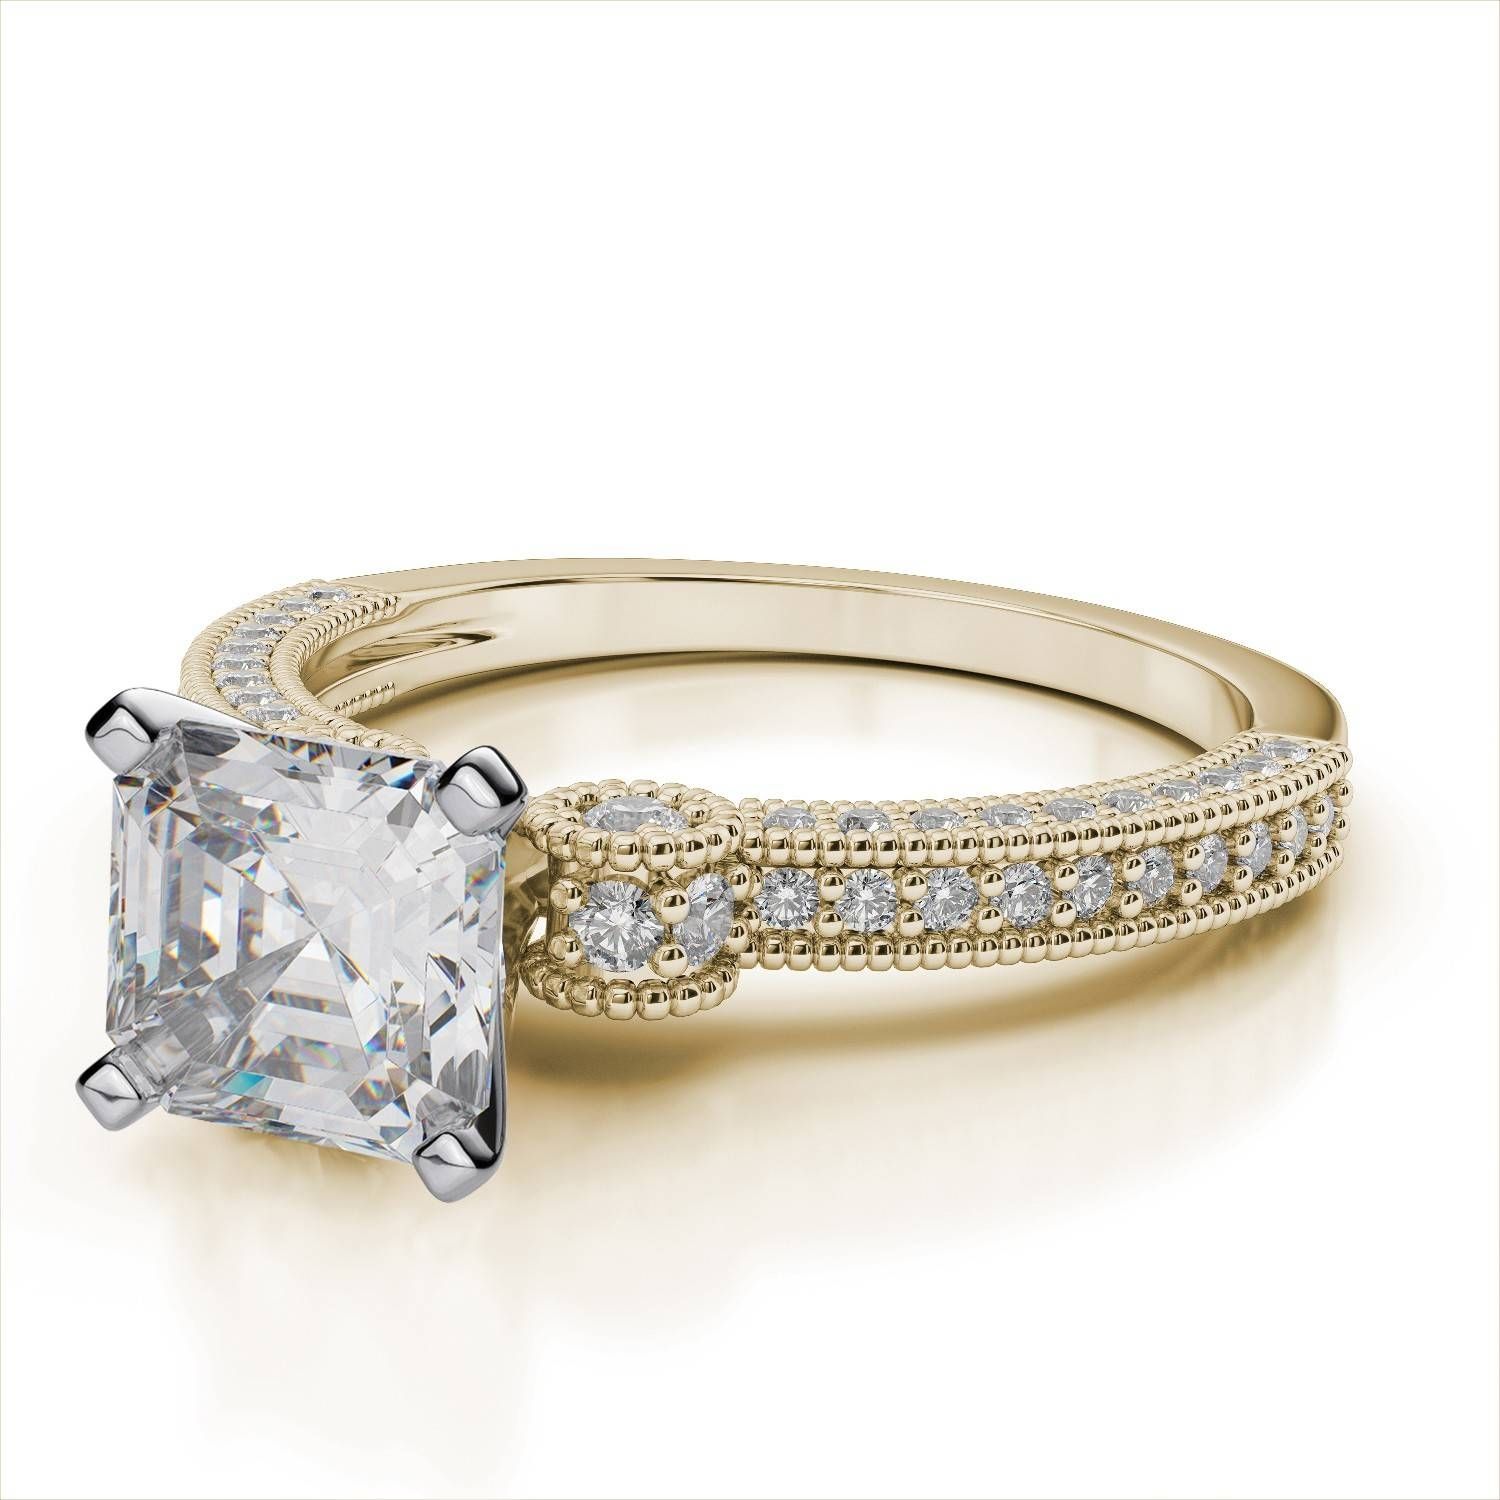 Antique Vintage Scroll Asscher Cut Diamond Engagement Ring In 14k Throughout Asscher Diamond Engagement Rings (View 10 of 15)